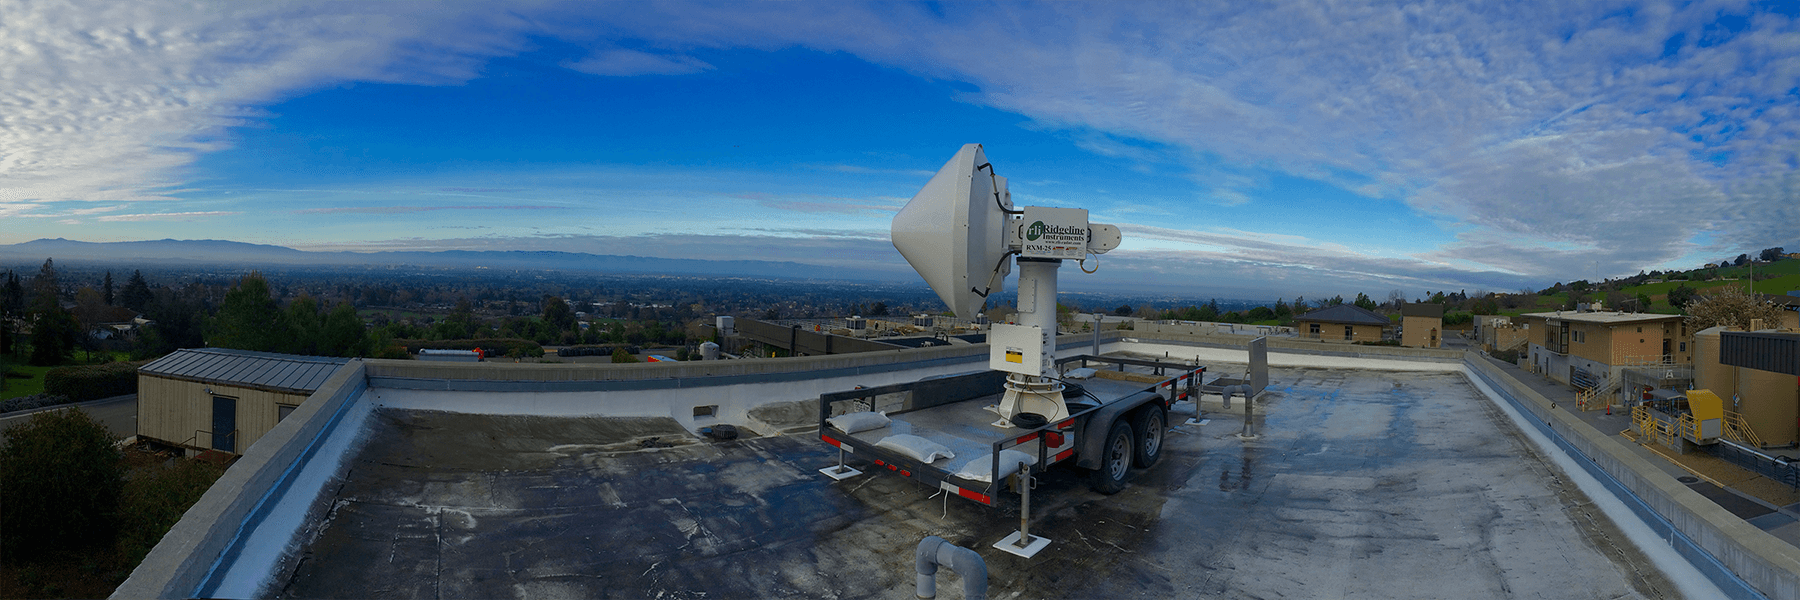 X-Band Radar in Santa Clara. Credit: Francesc Junyent, CIRA